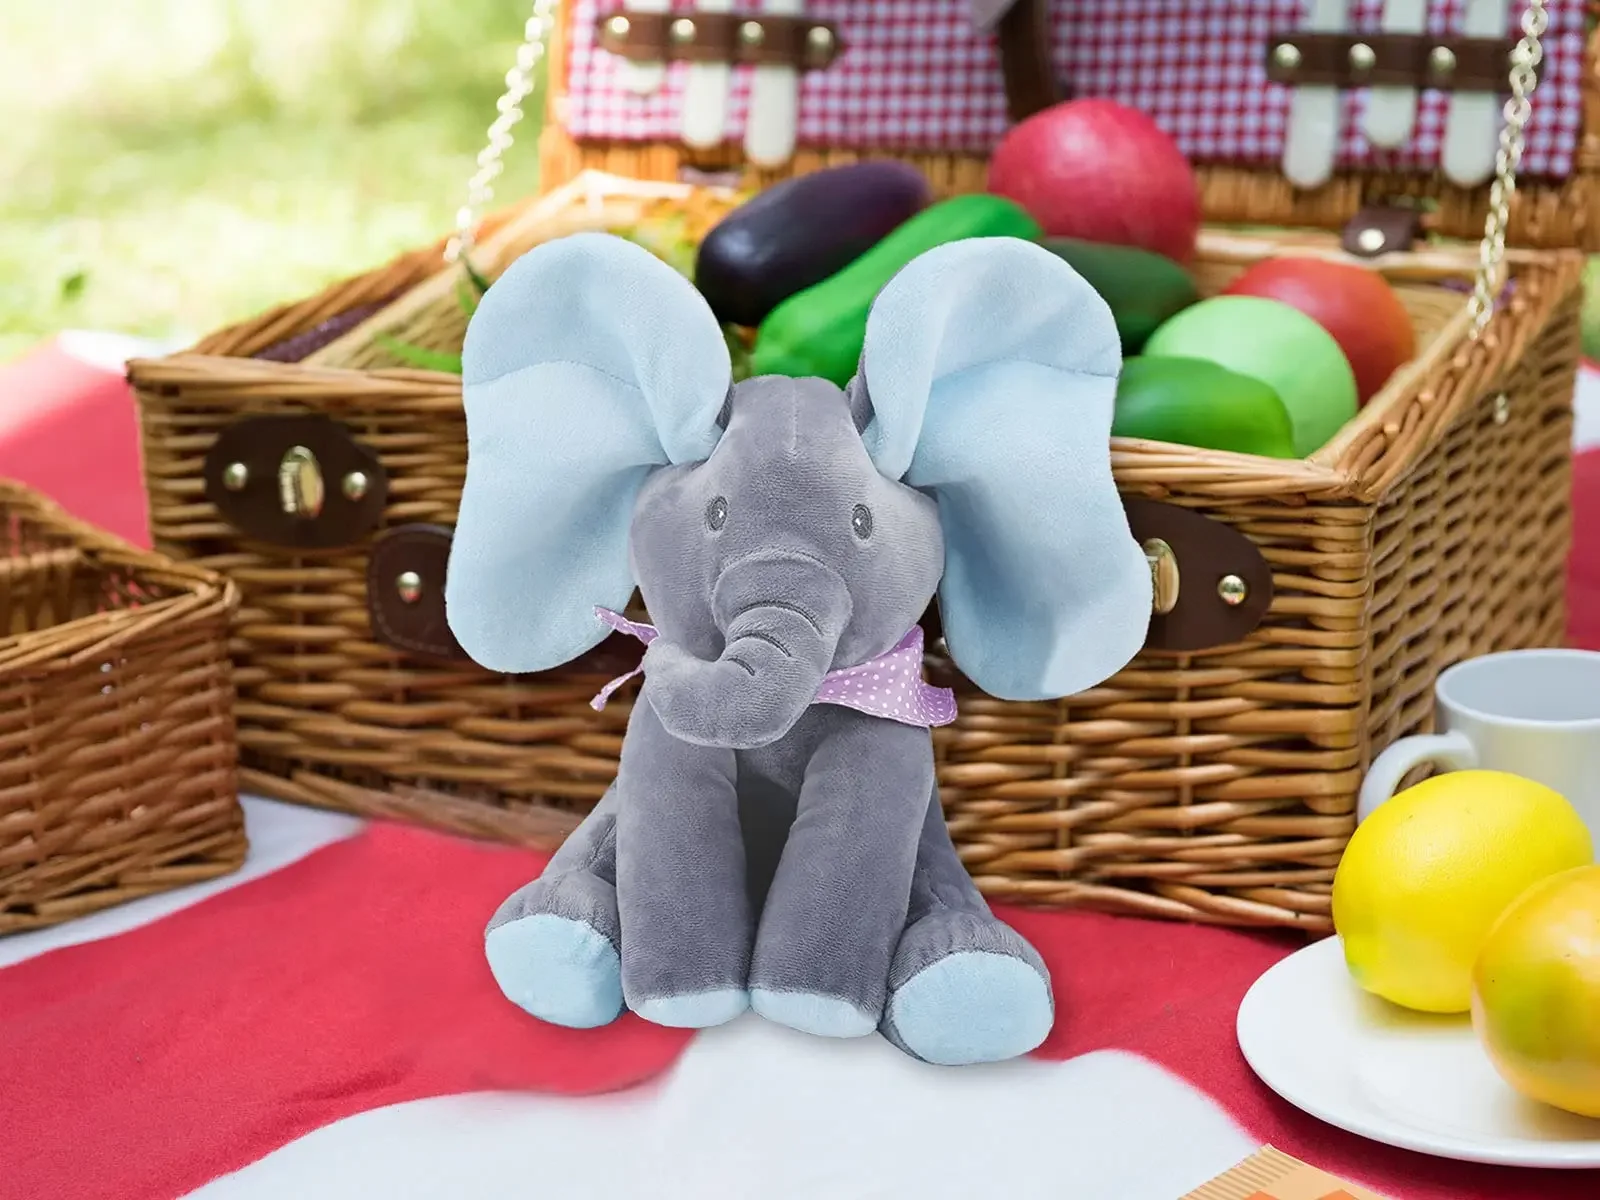 Elephant pet. Elephant Toys Plush.